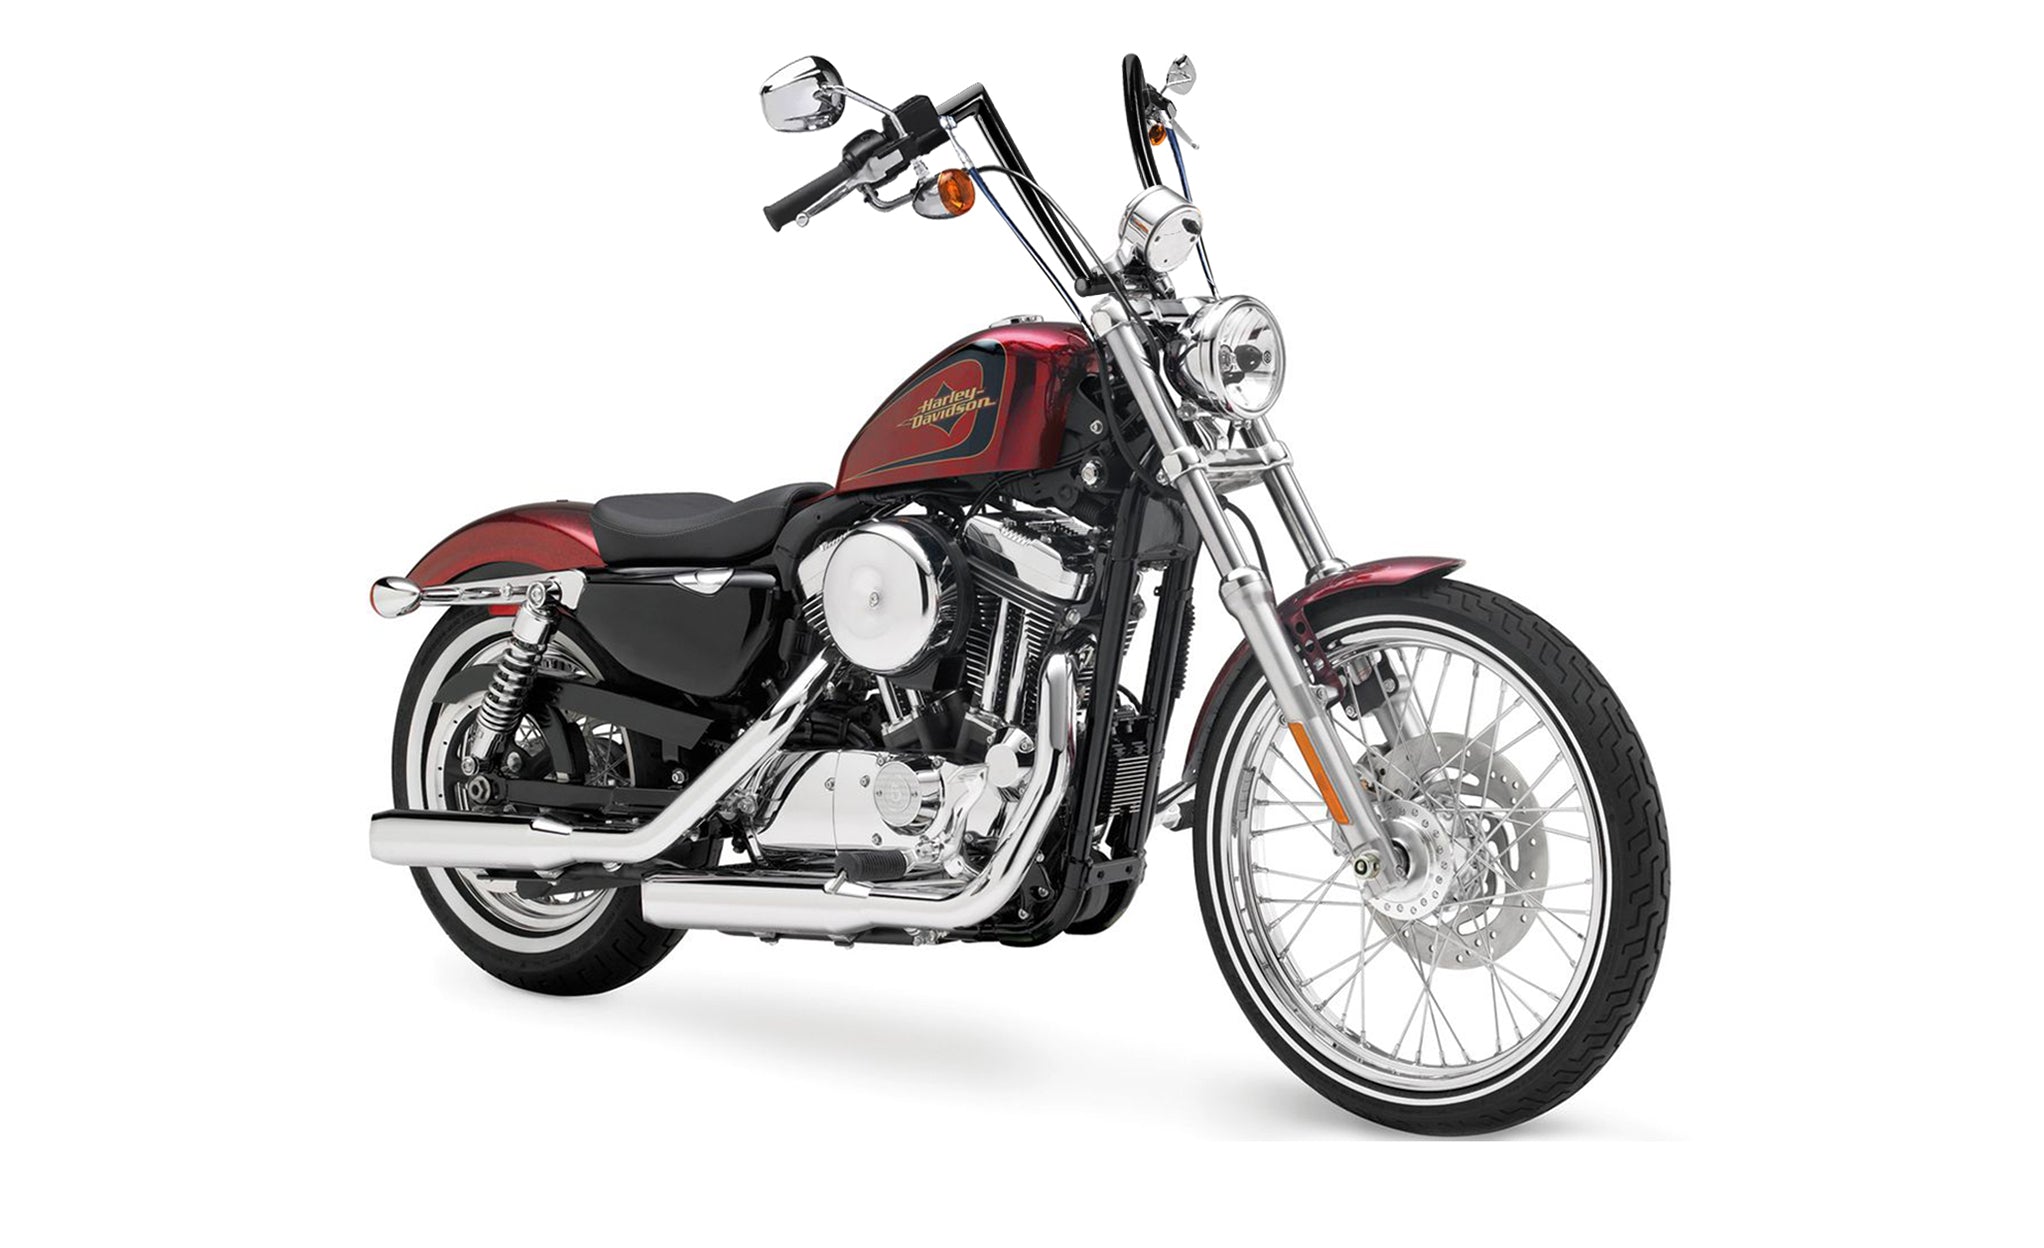 Viking Iron Born 9" Handlebar For Harley Sportster Seventy Two Gloss Black Bag on Bike View @expand